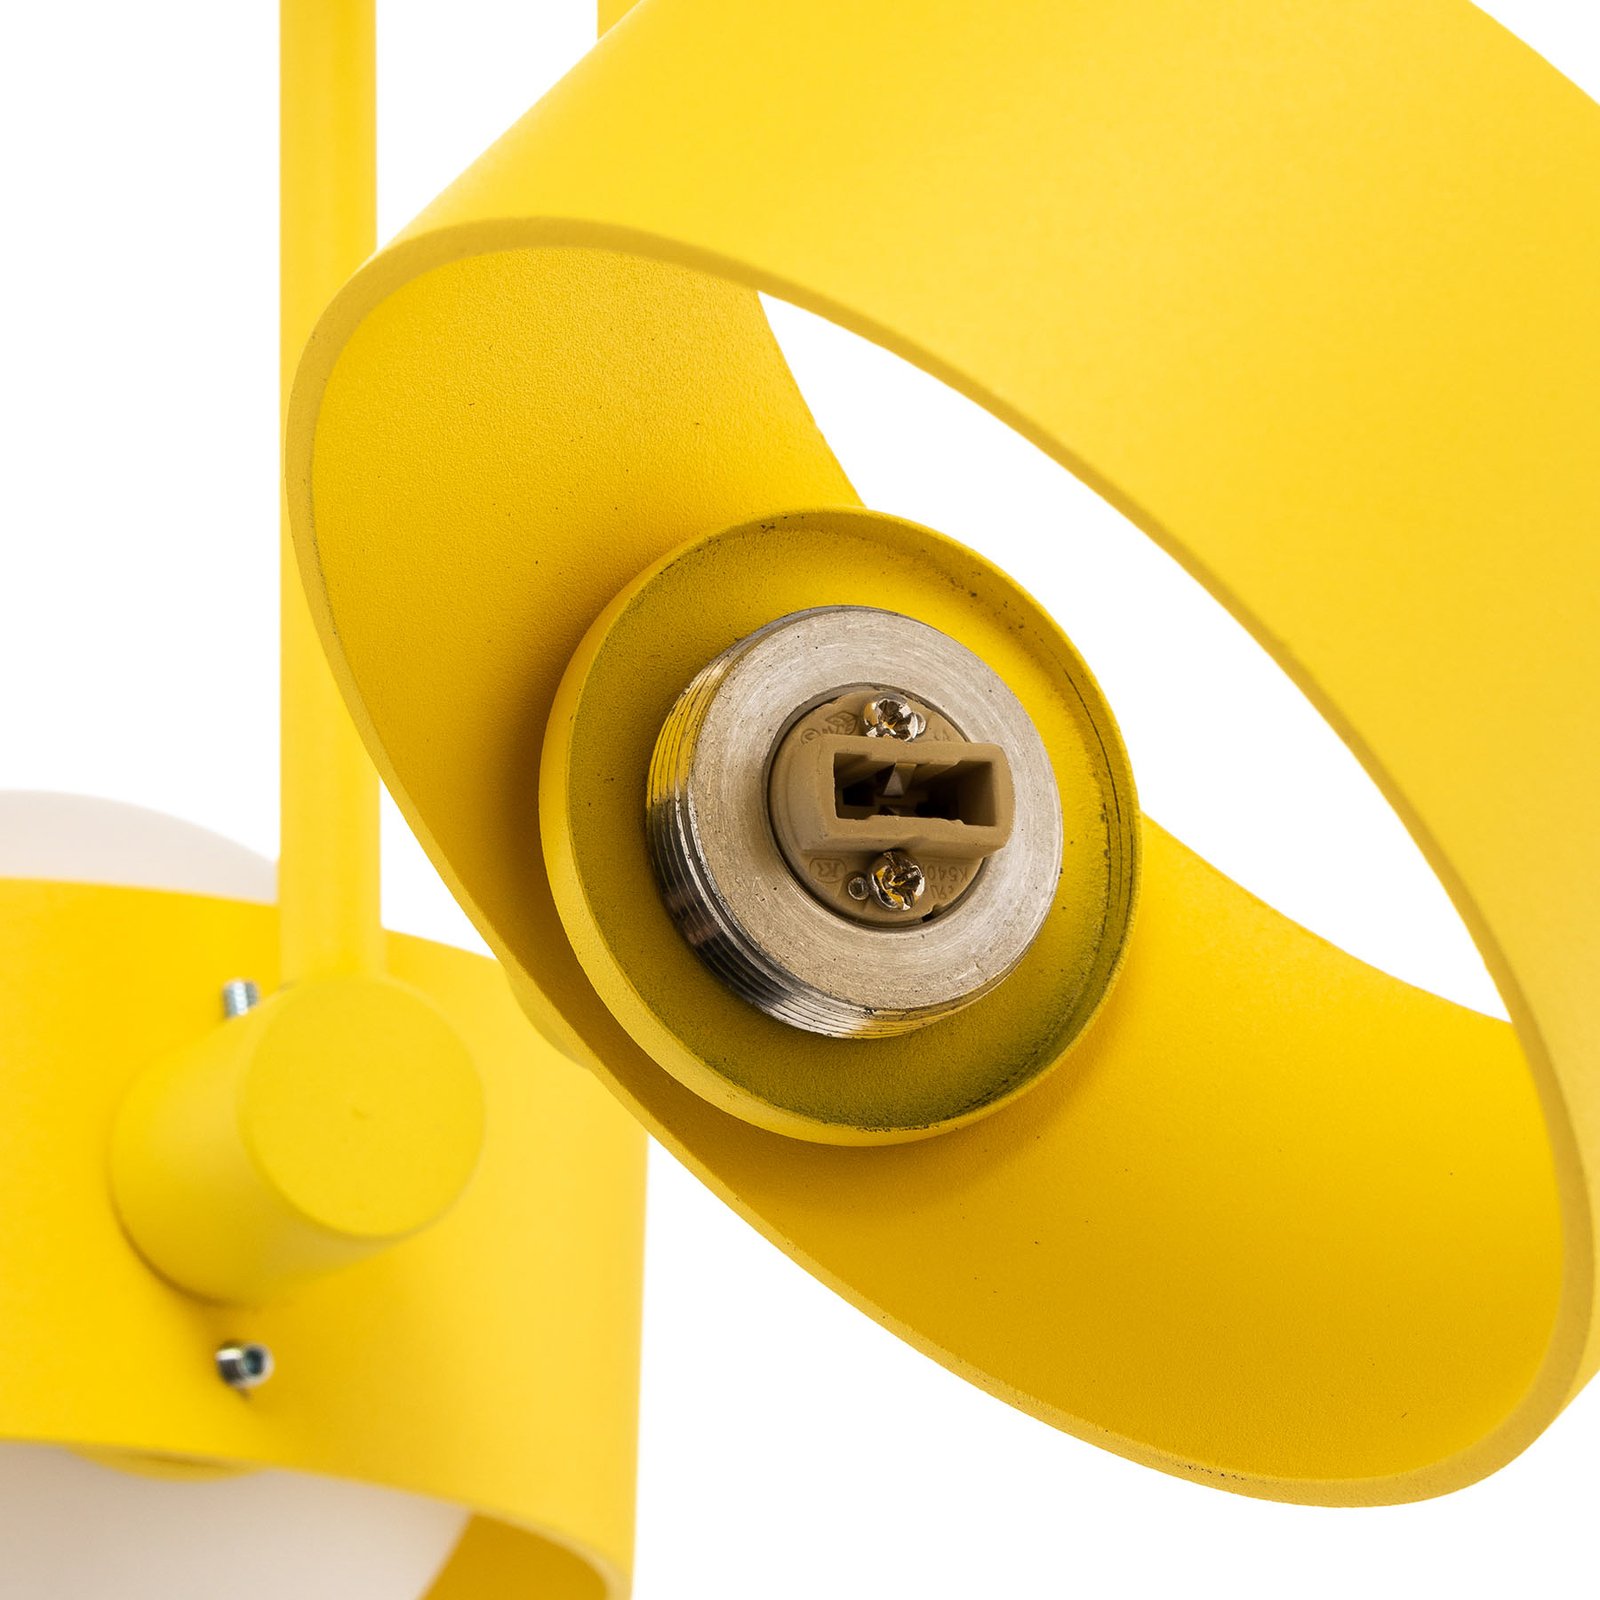 Plafondlamp Mado van staal, geel, 2-lamps